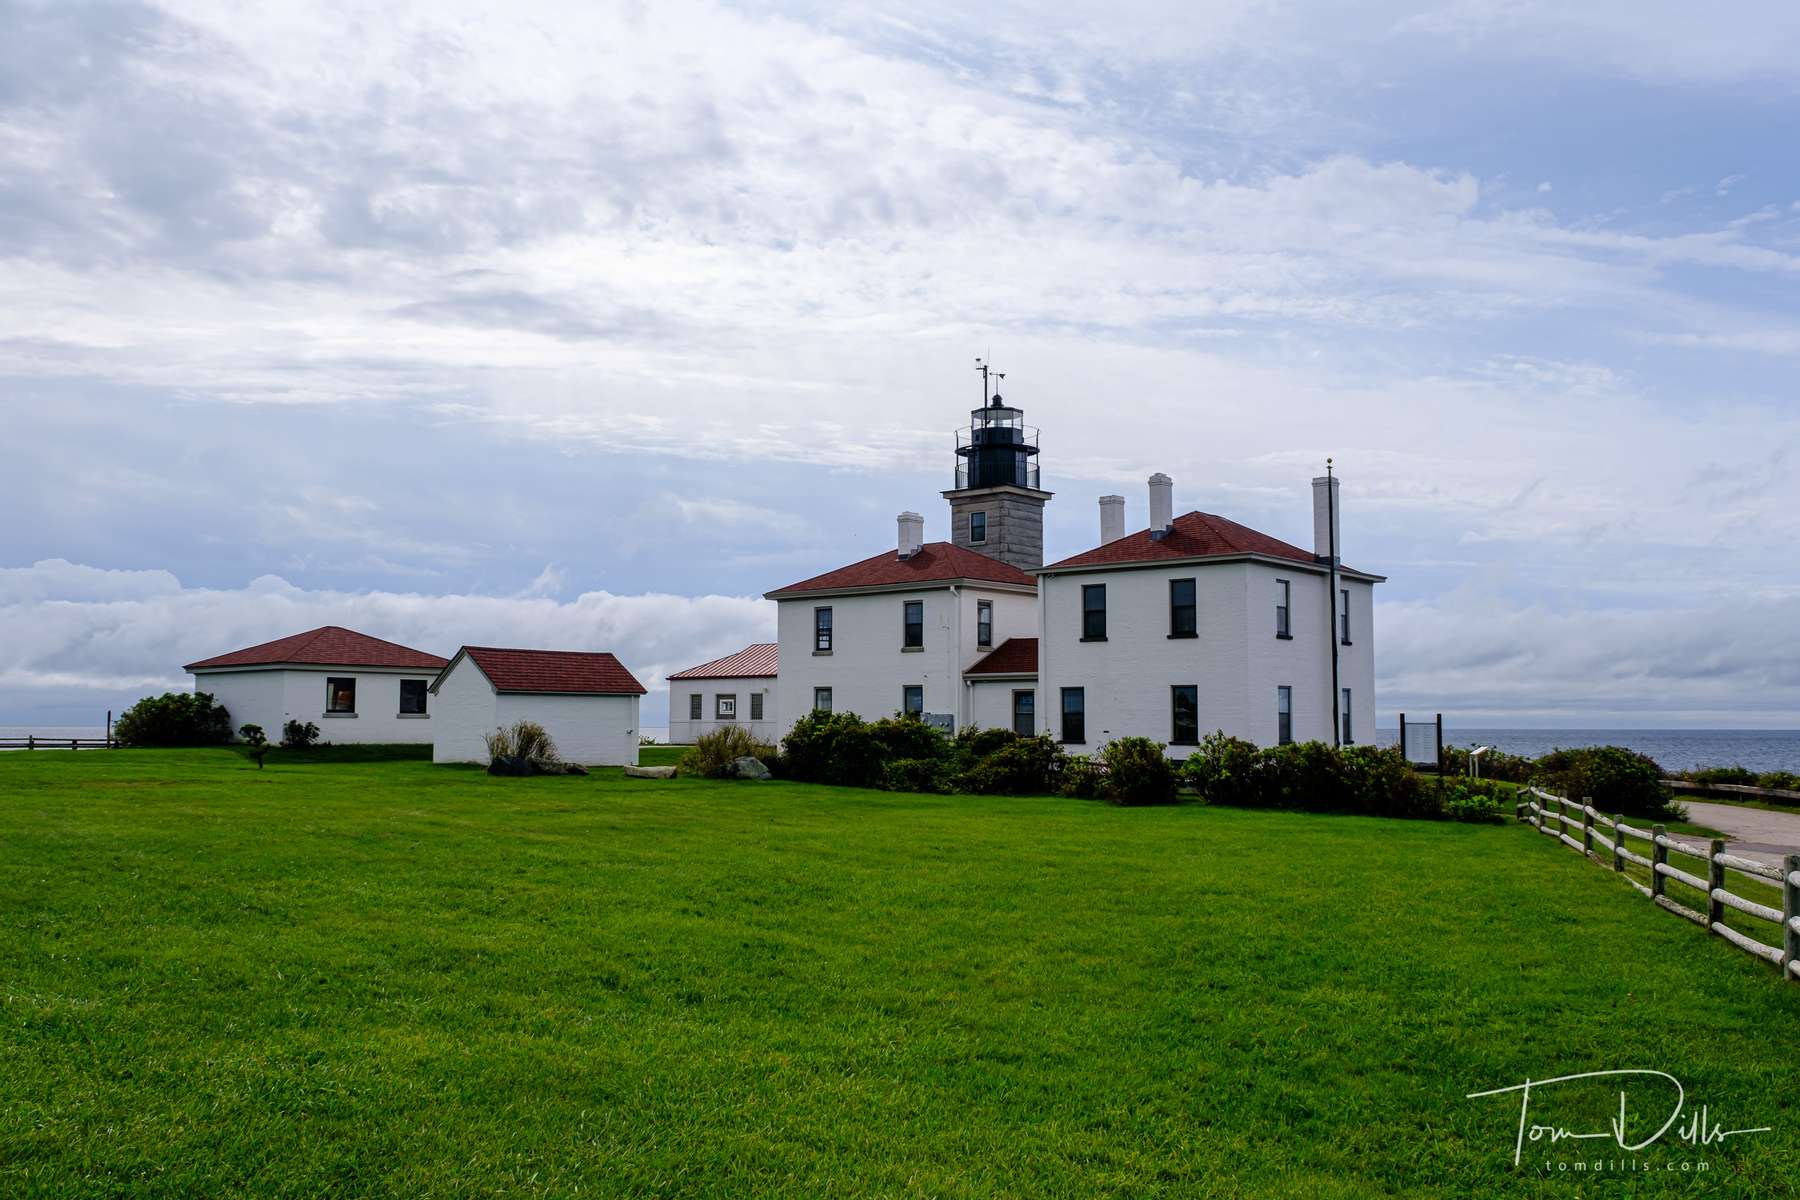 The Beavertail Lighthouse overlooking Narragansett Bay near Jamestown, Rhode Island.  The lighthouse, built in 1749, is the nation's third oldest.